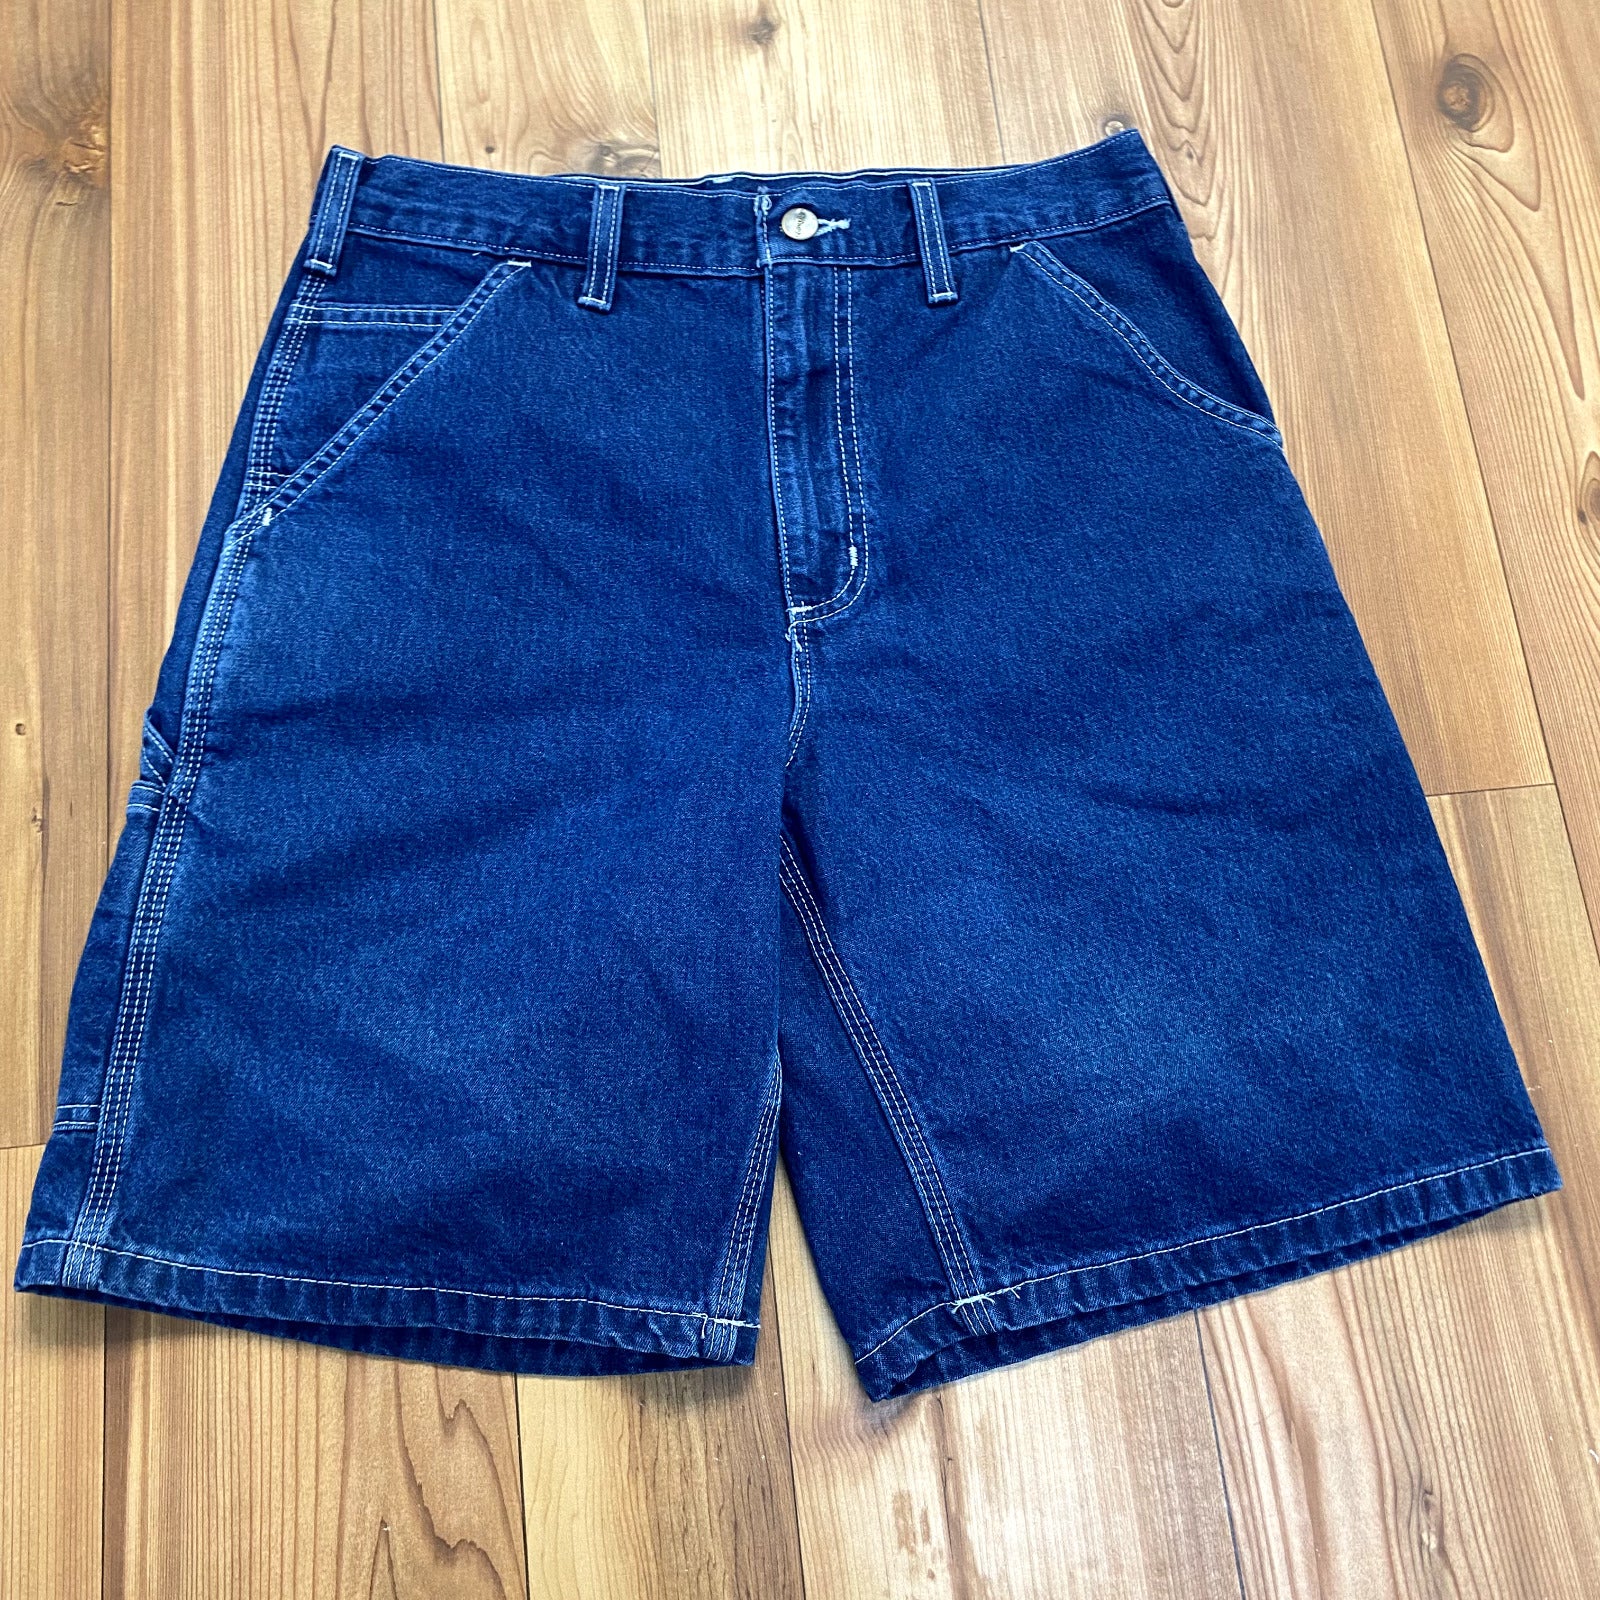 Carhartt Blue Denim Cotton Multi-Pocket Regular Fit Shorts Men's Size 30